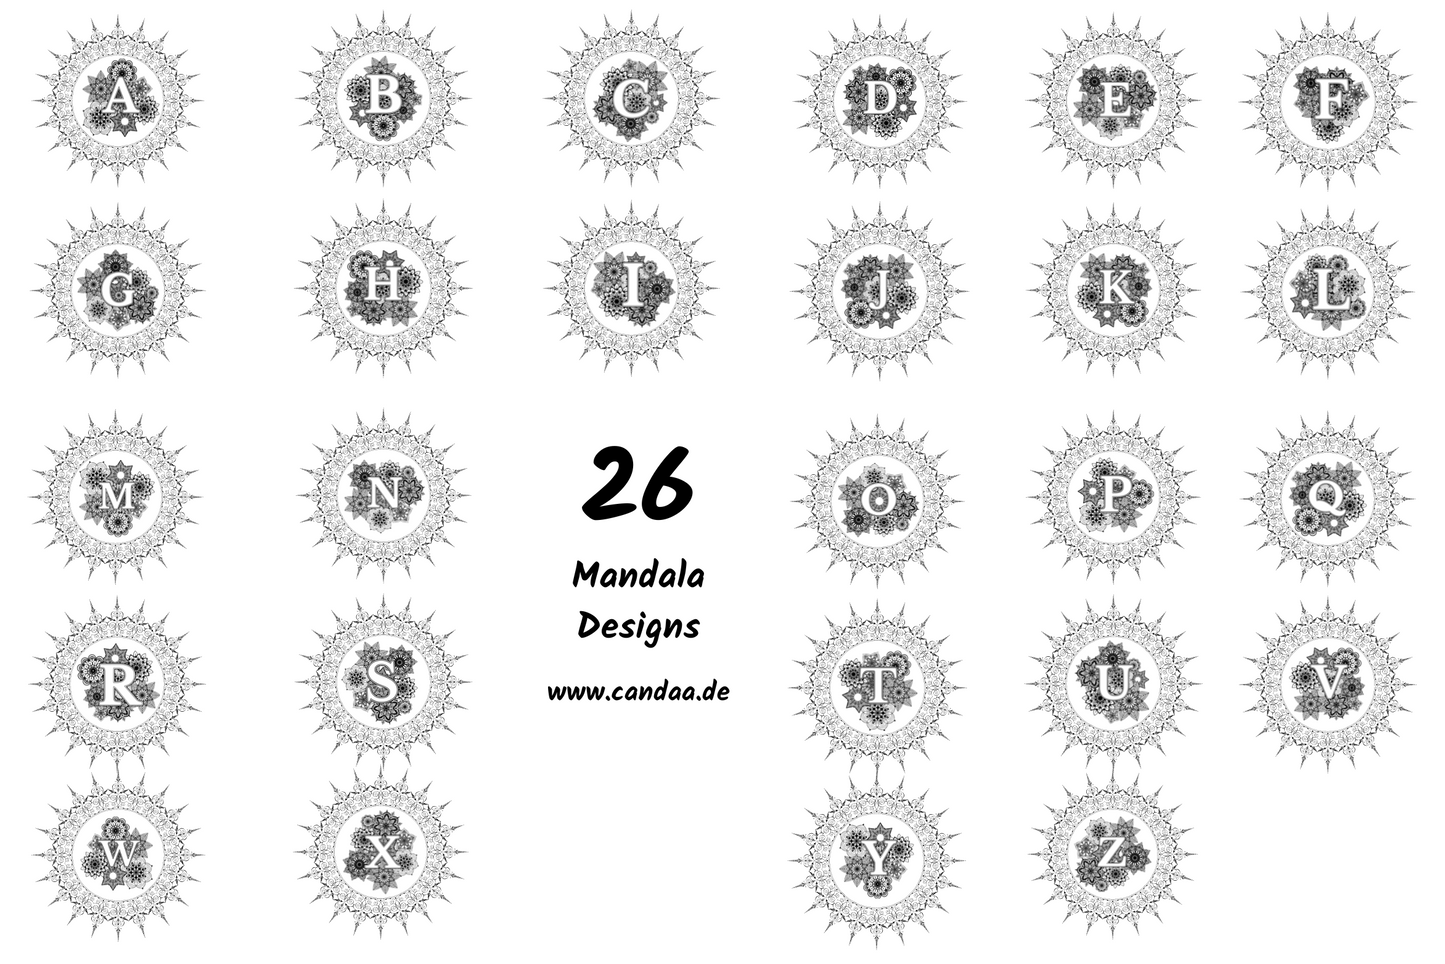 26 Mandala Designs